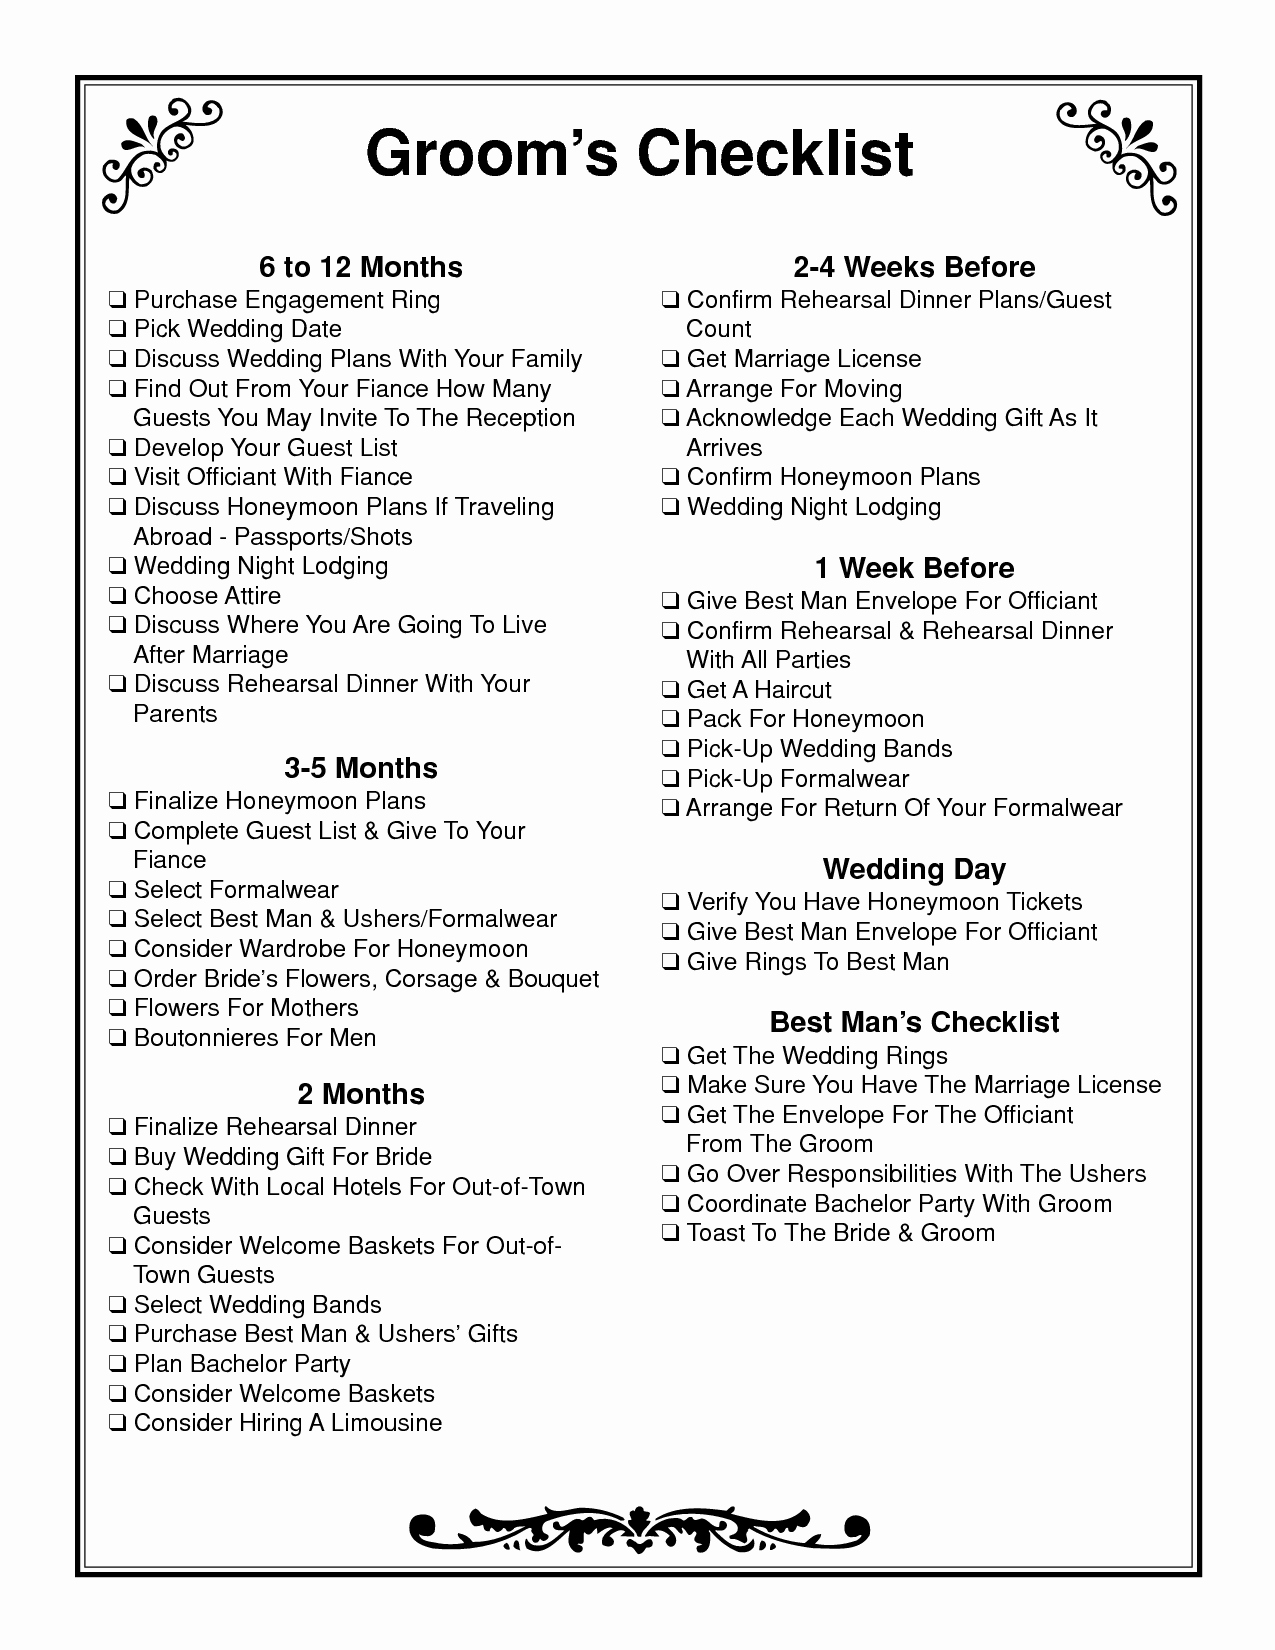 Wedding Day Checklist Printable Lovely Groom Checklist Wedding Checklist